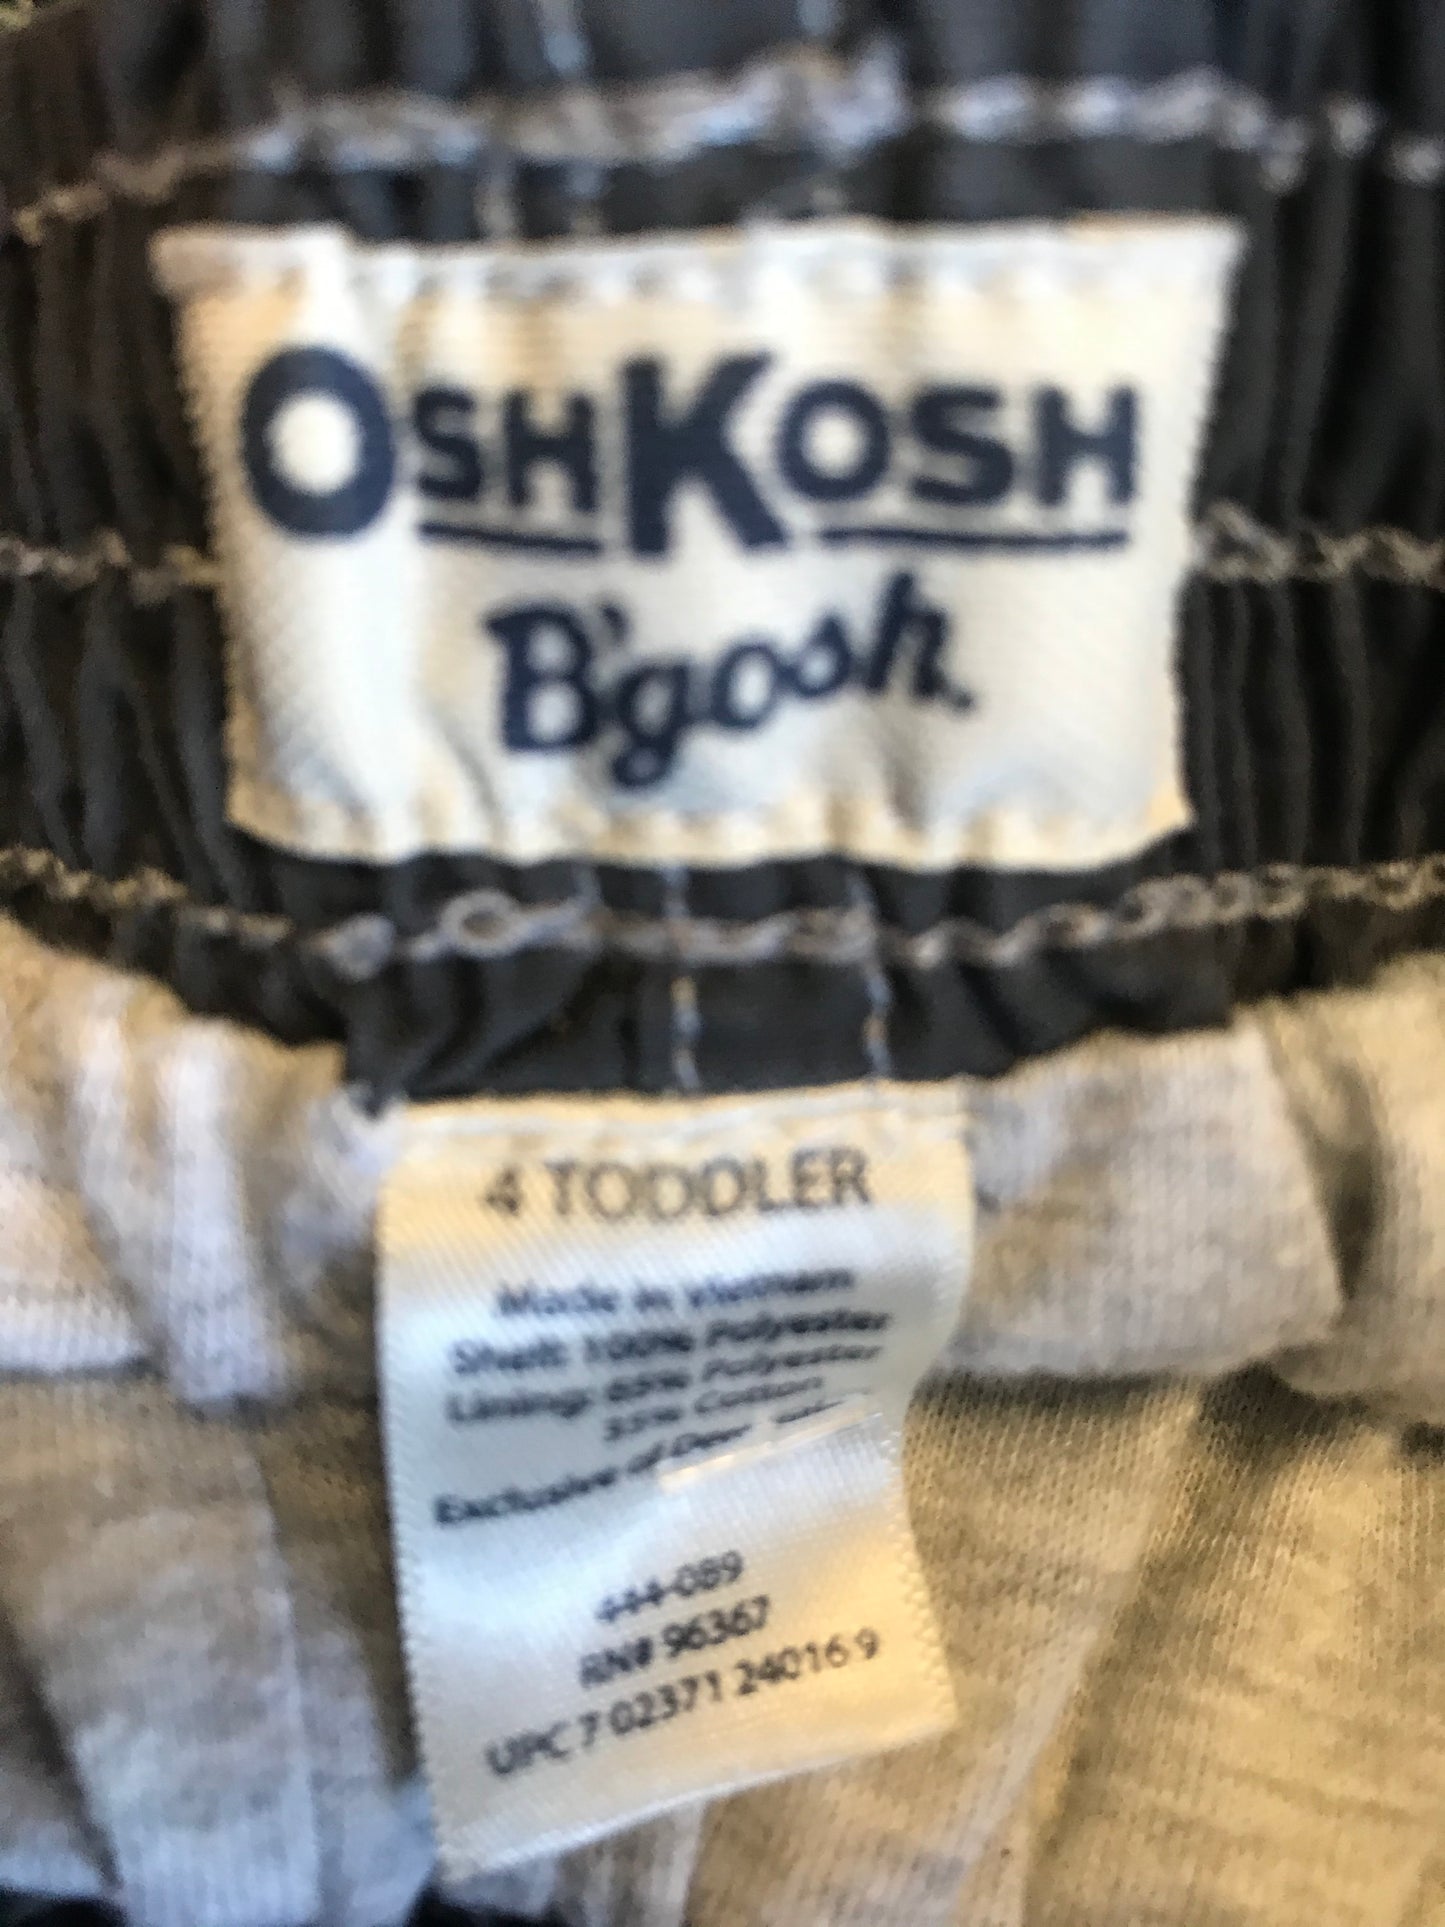 Osh Kosh Bgosh pants